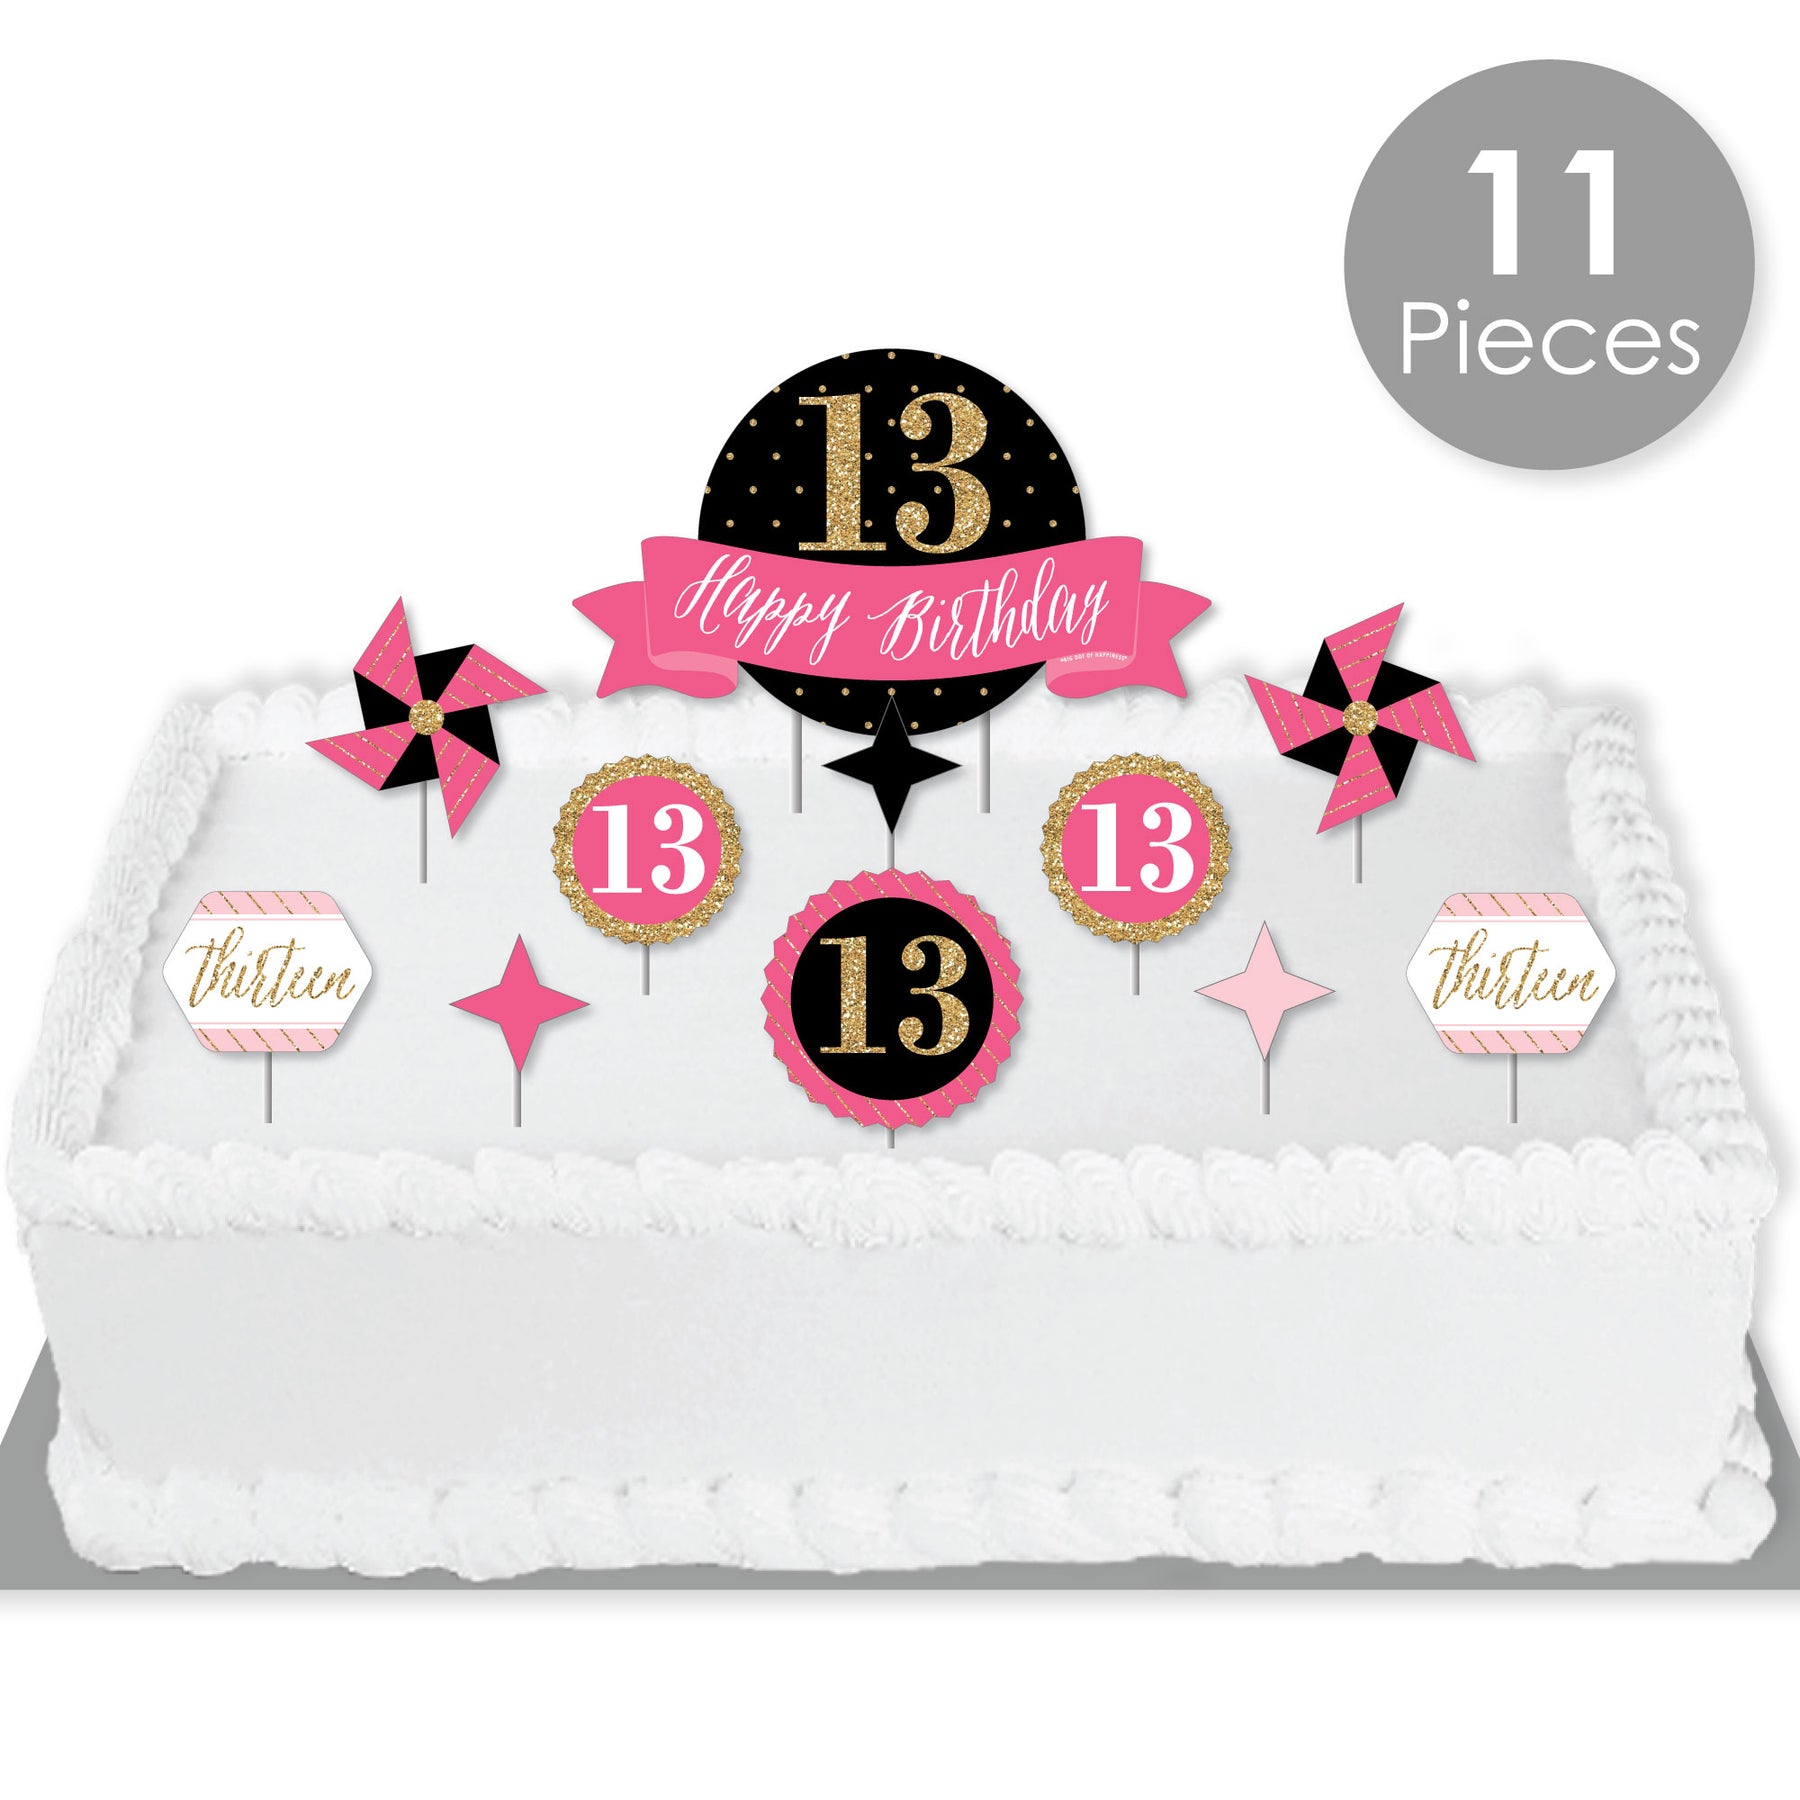 Tik Tok 13th birthday cake with... - Emma's Home Made Cakes | Facebook